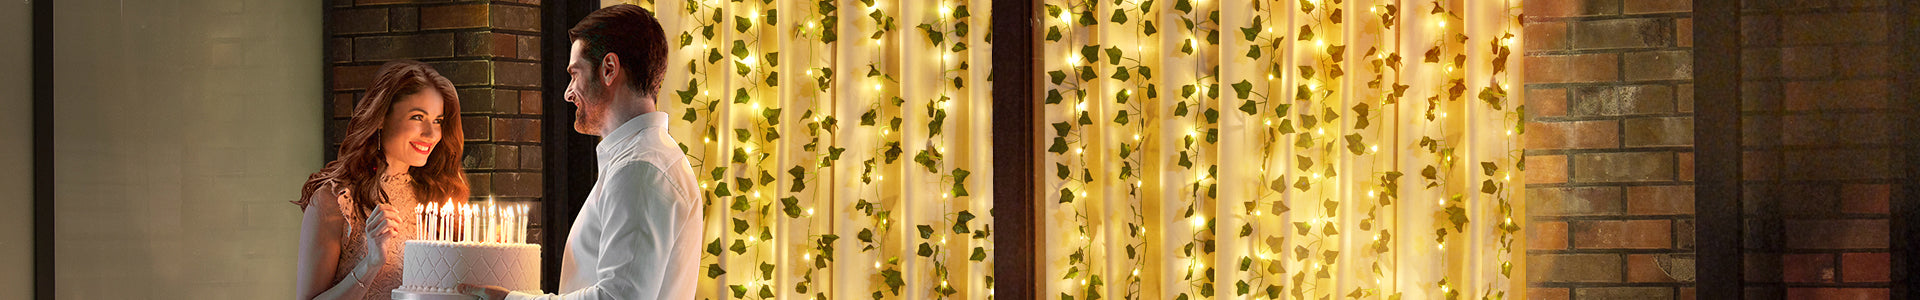 Artificial Ivy Vine Lights